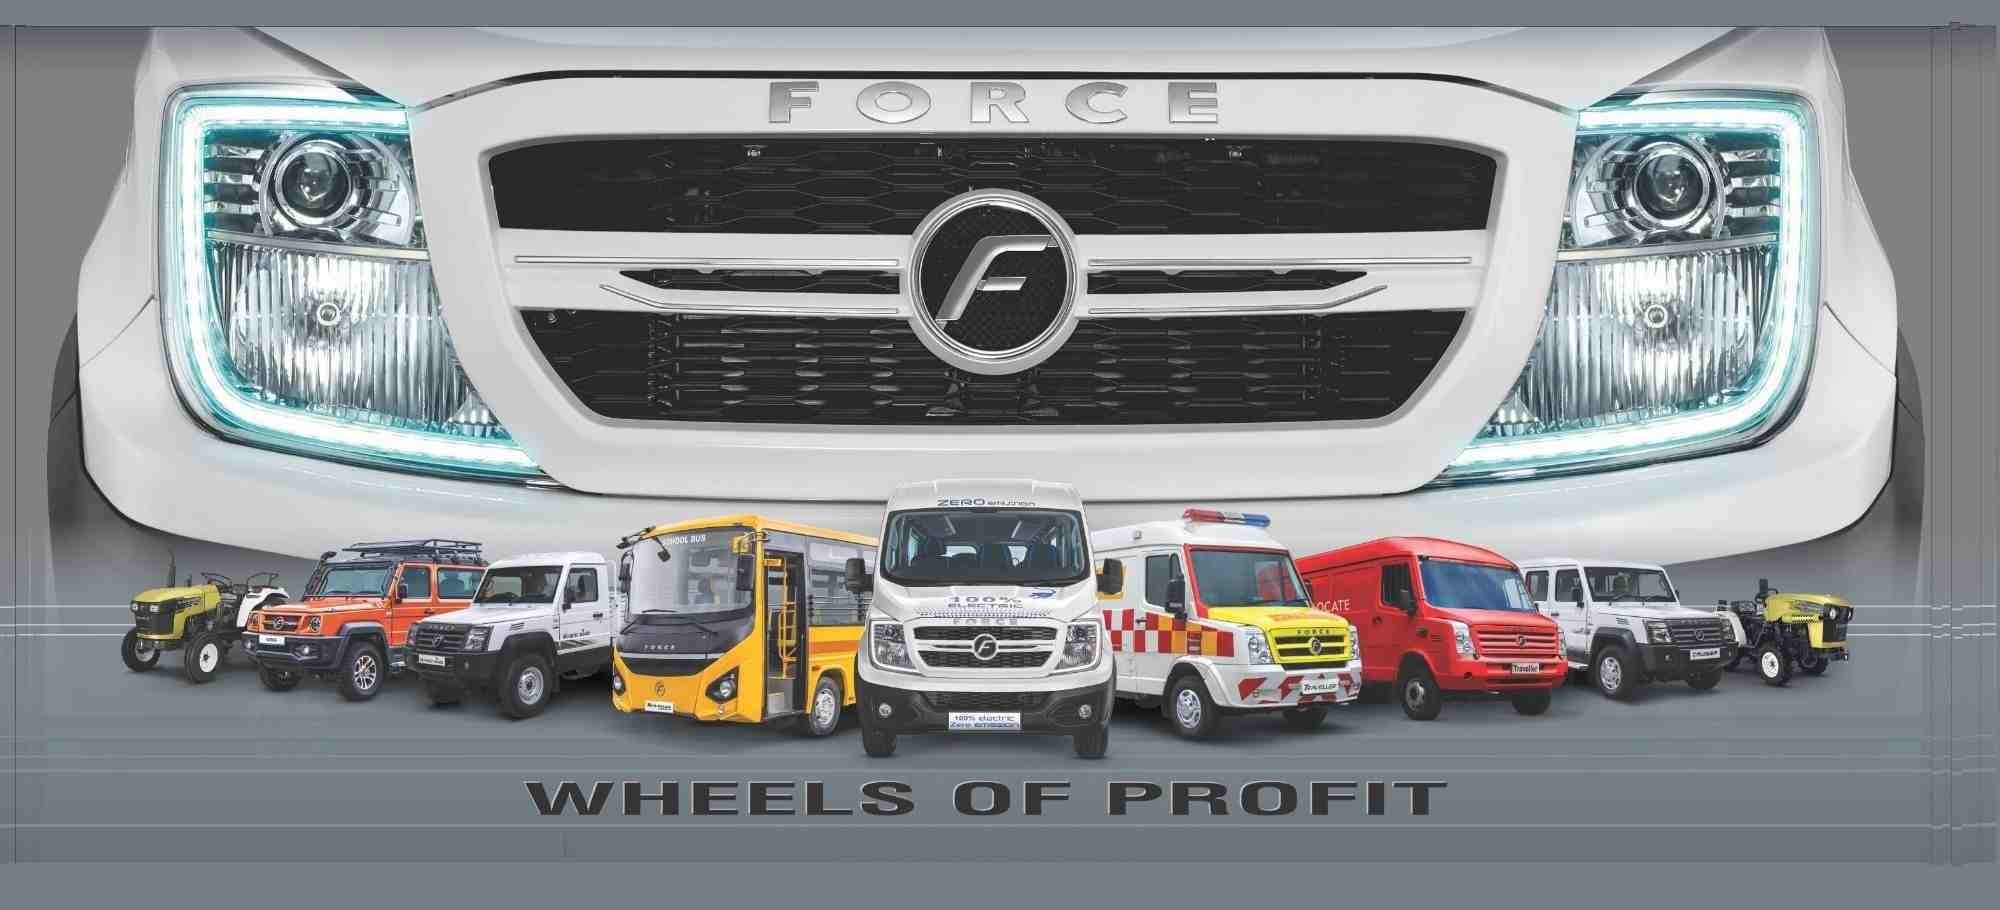 Force Motors Hyderabad | Telangana – Traveller, Toofan, Ambulance, Gurkha